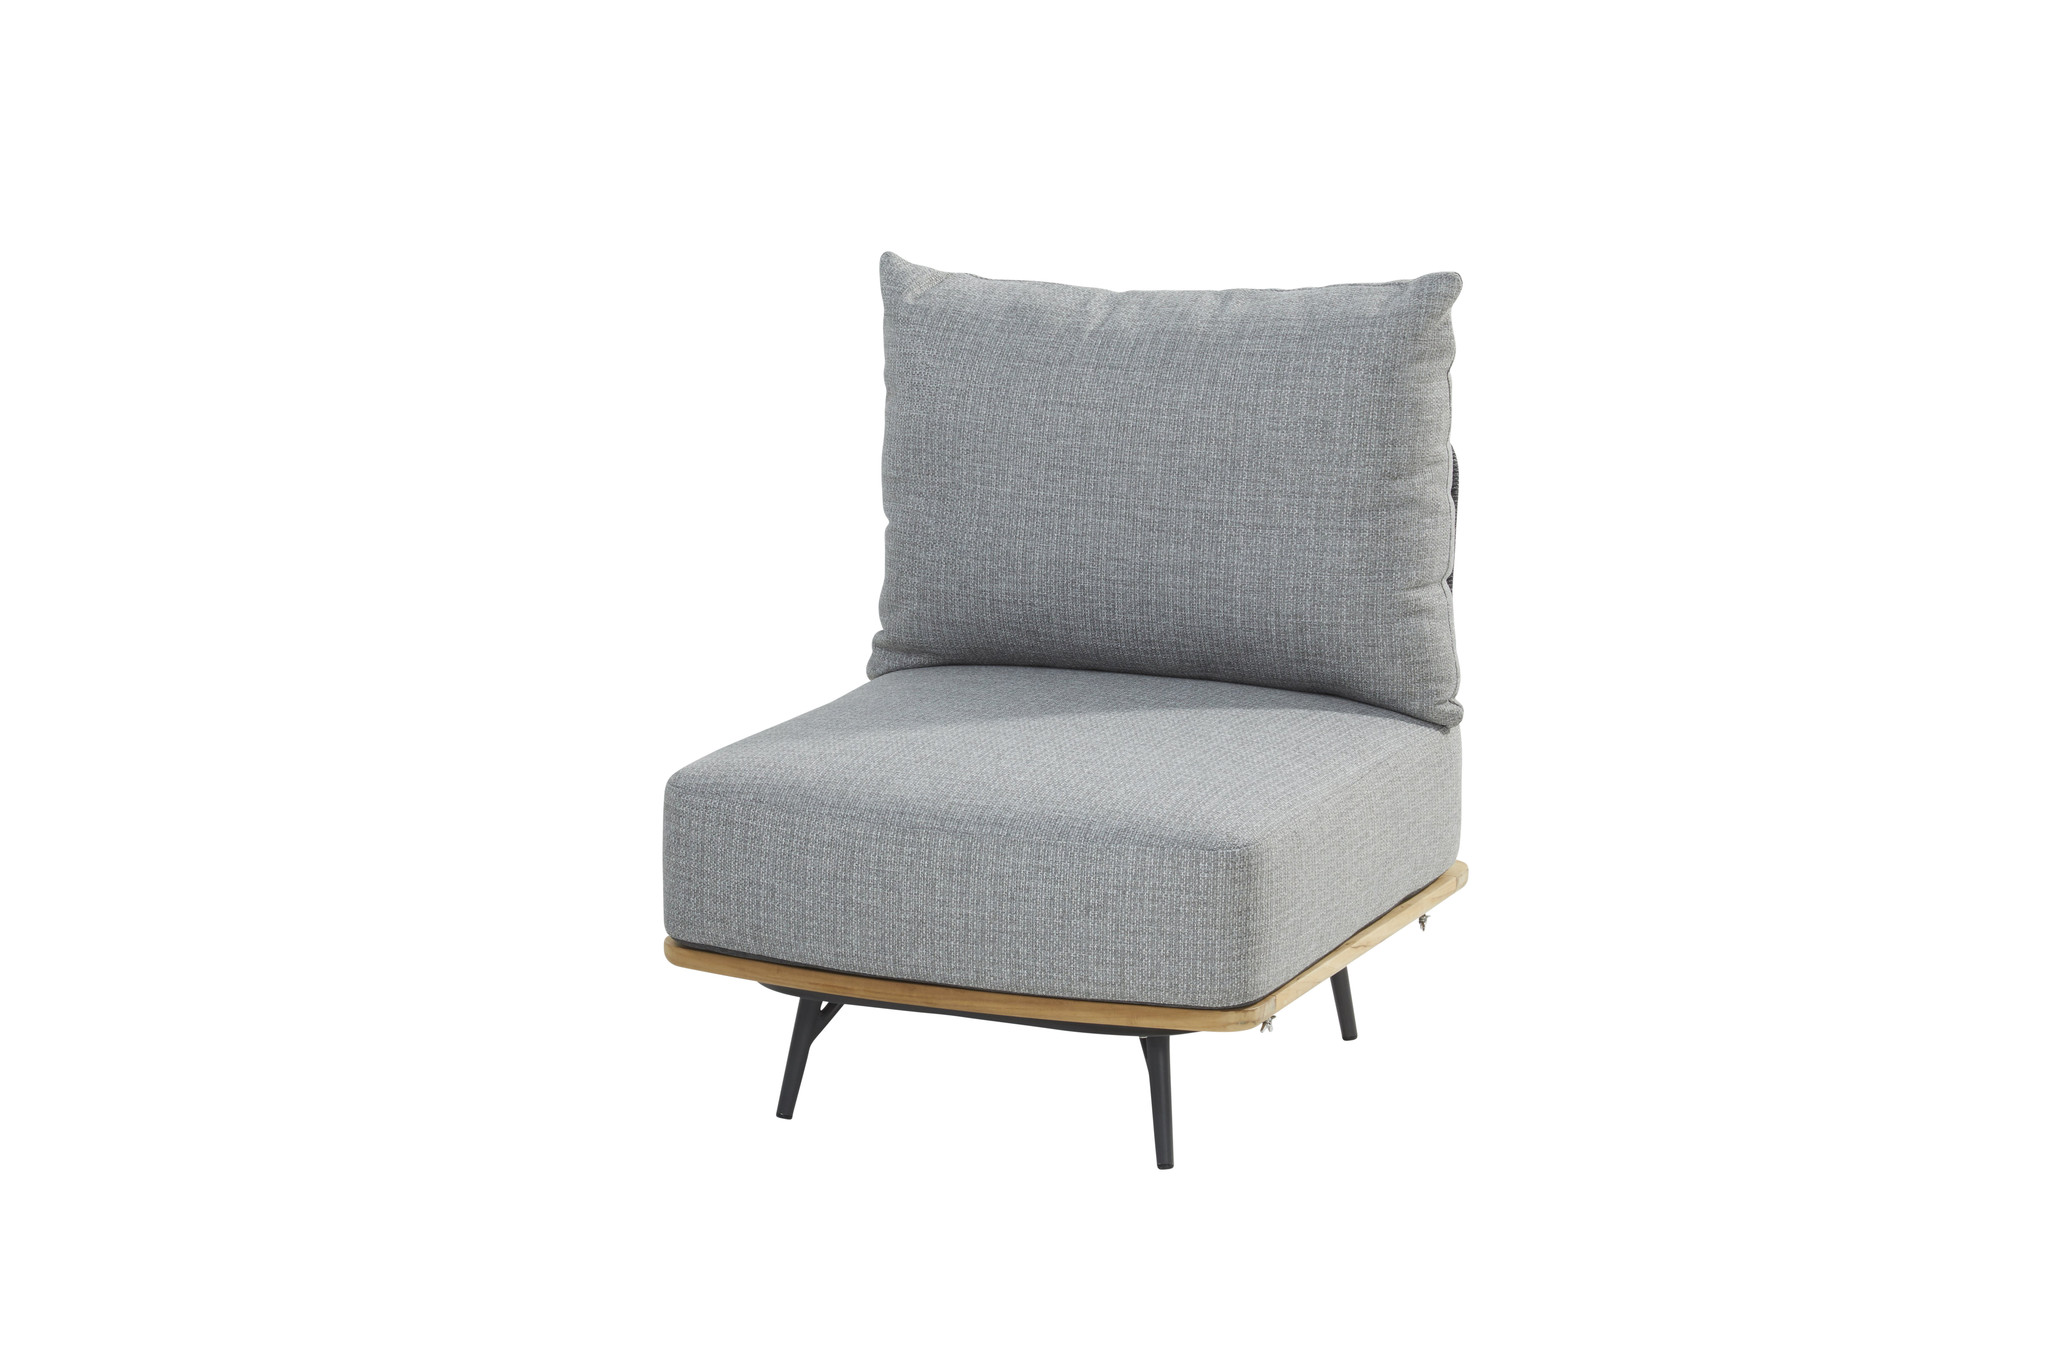 4 Seasons chair gascylinders Positano furniture mattress | Springbed living - outdoor | Outdoor 